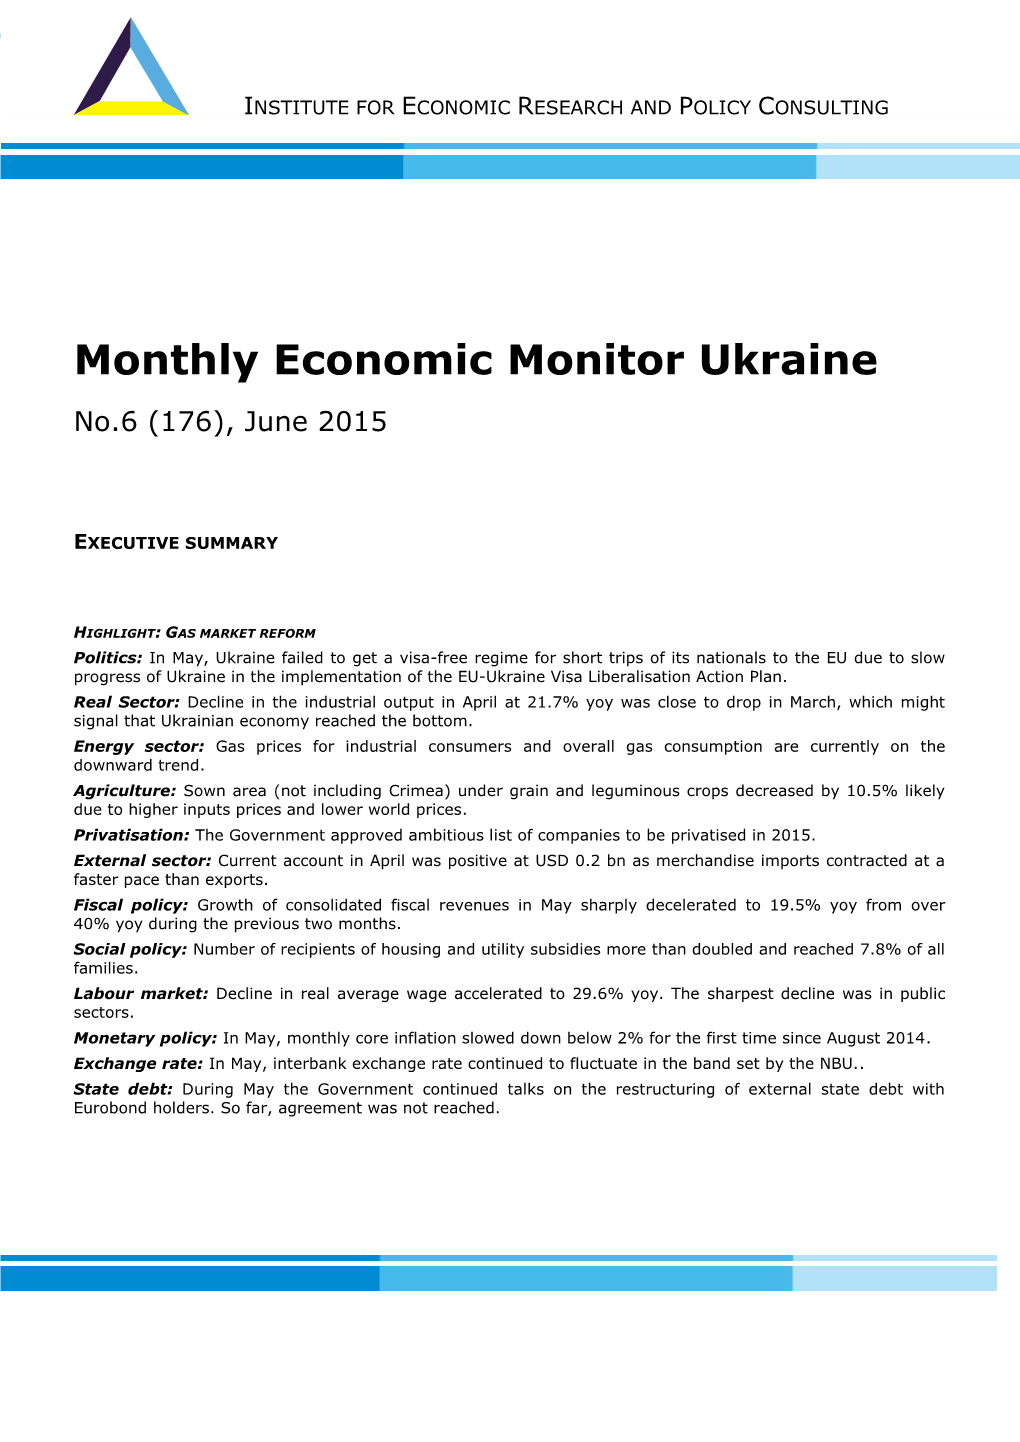 Monthly Economic Monitor Ukraine No.6 (176), June 2015